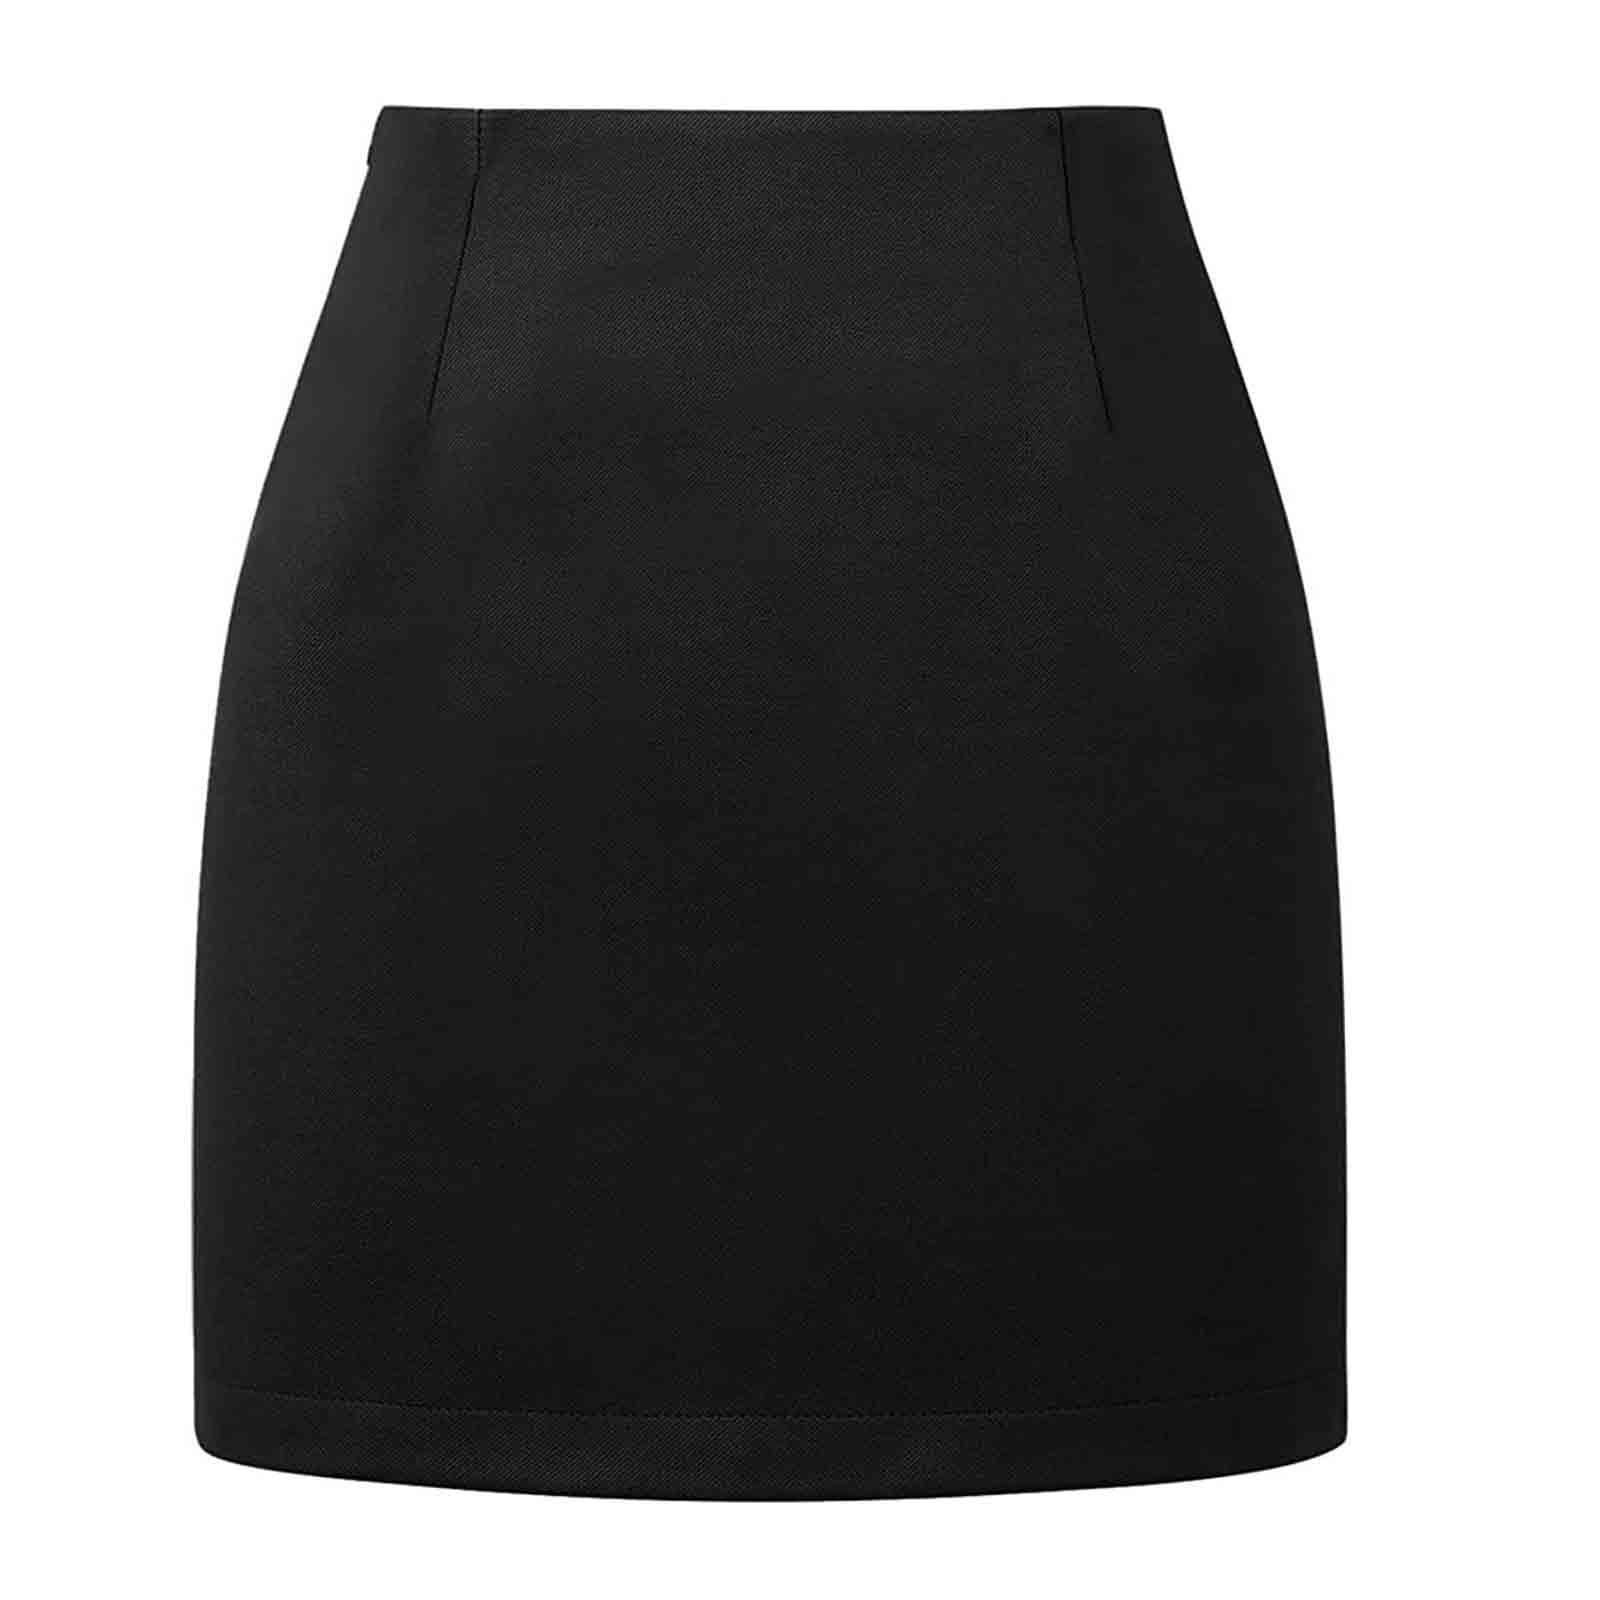 Plaid Pencil Skirts for Women High Waist A Line Slim Fit Mini Skirt ...